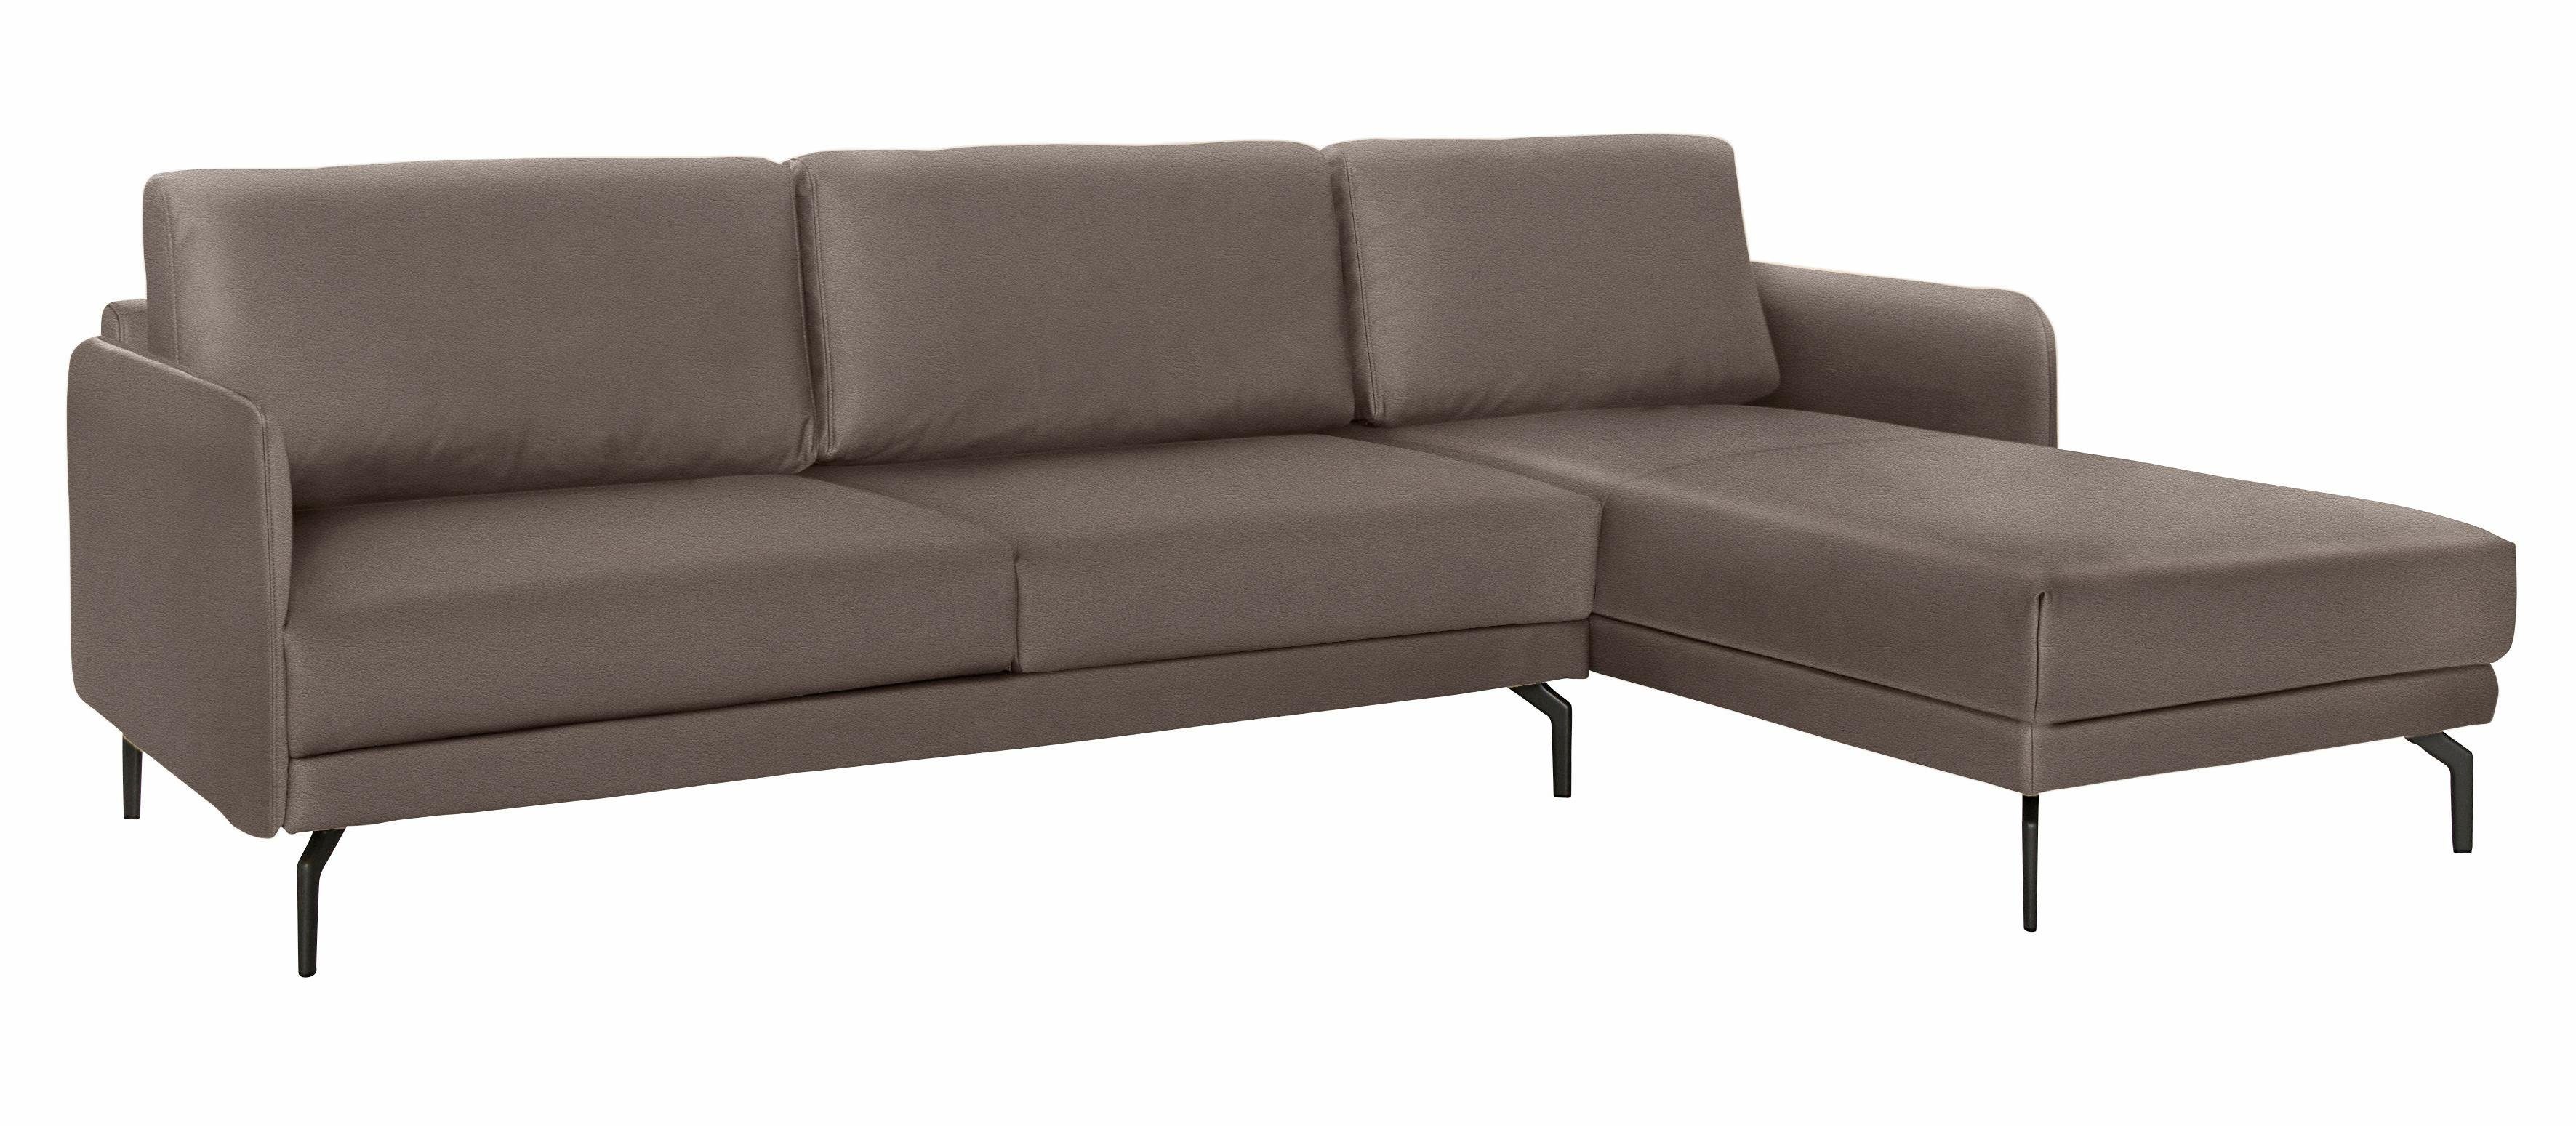 hülsta sofa Ecksofa Umbragrau schmal, 274 cm, Armlehne hs.450, Breite Alugussfuß sehr